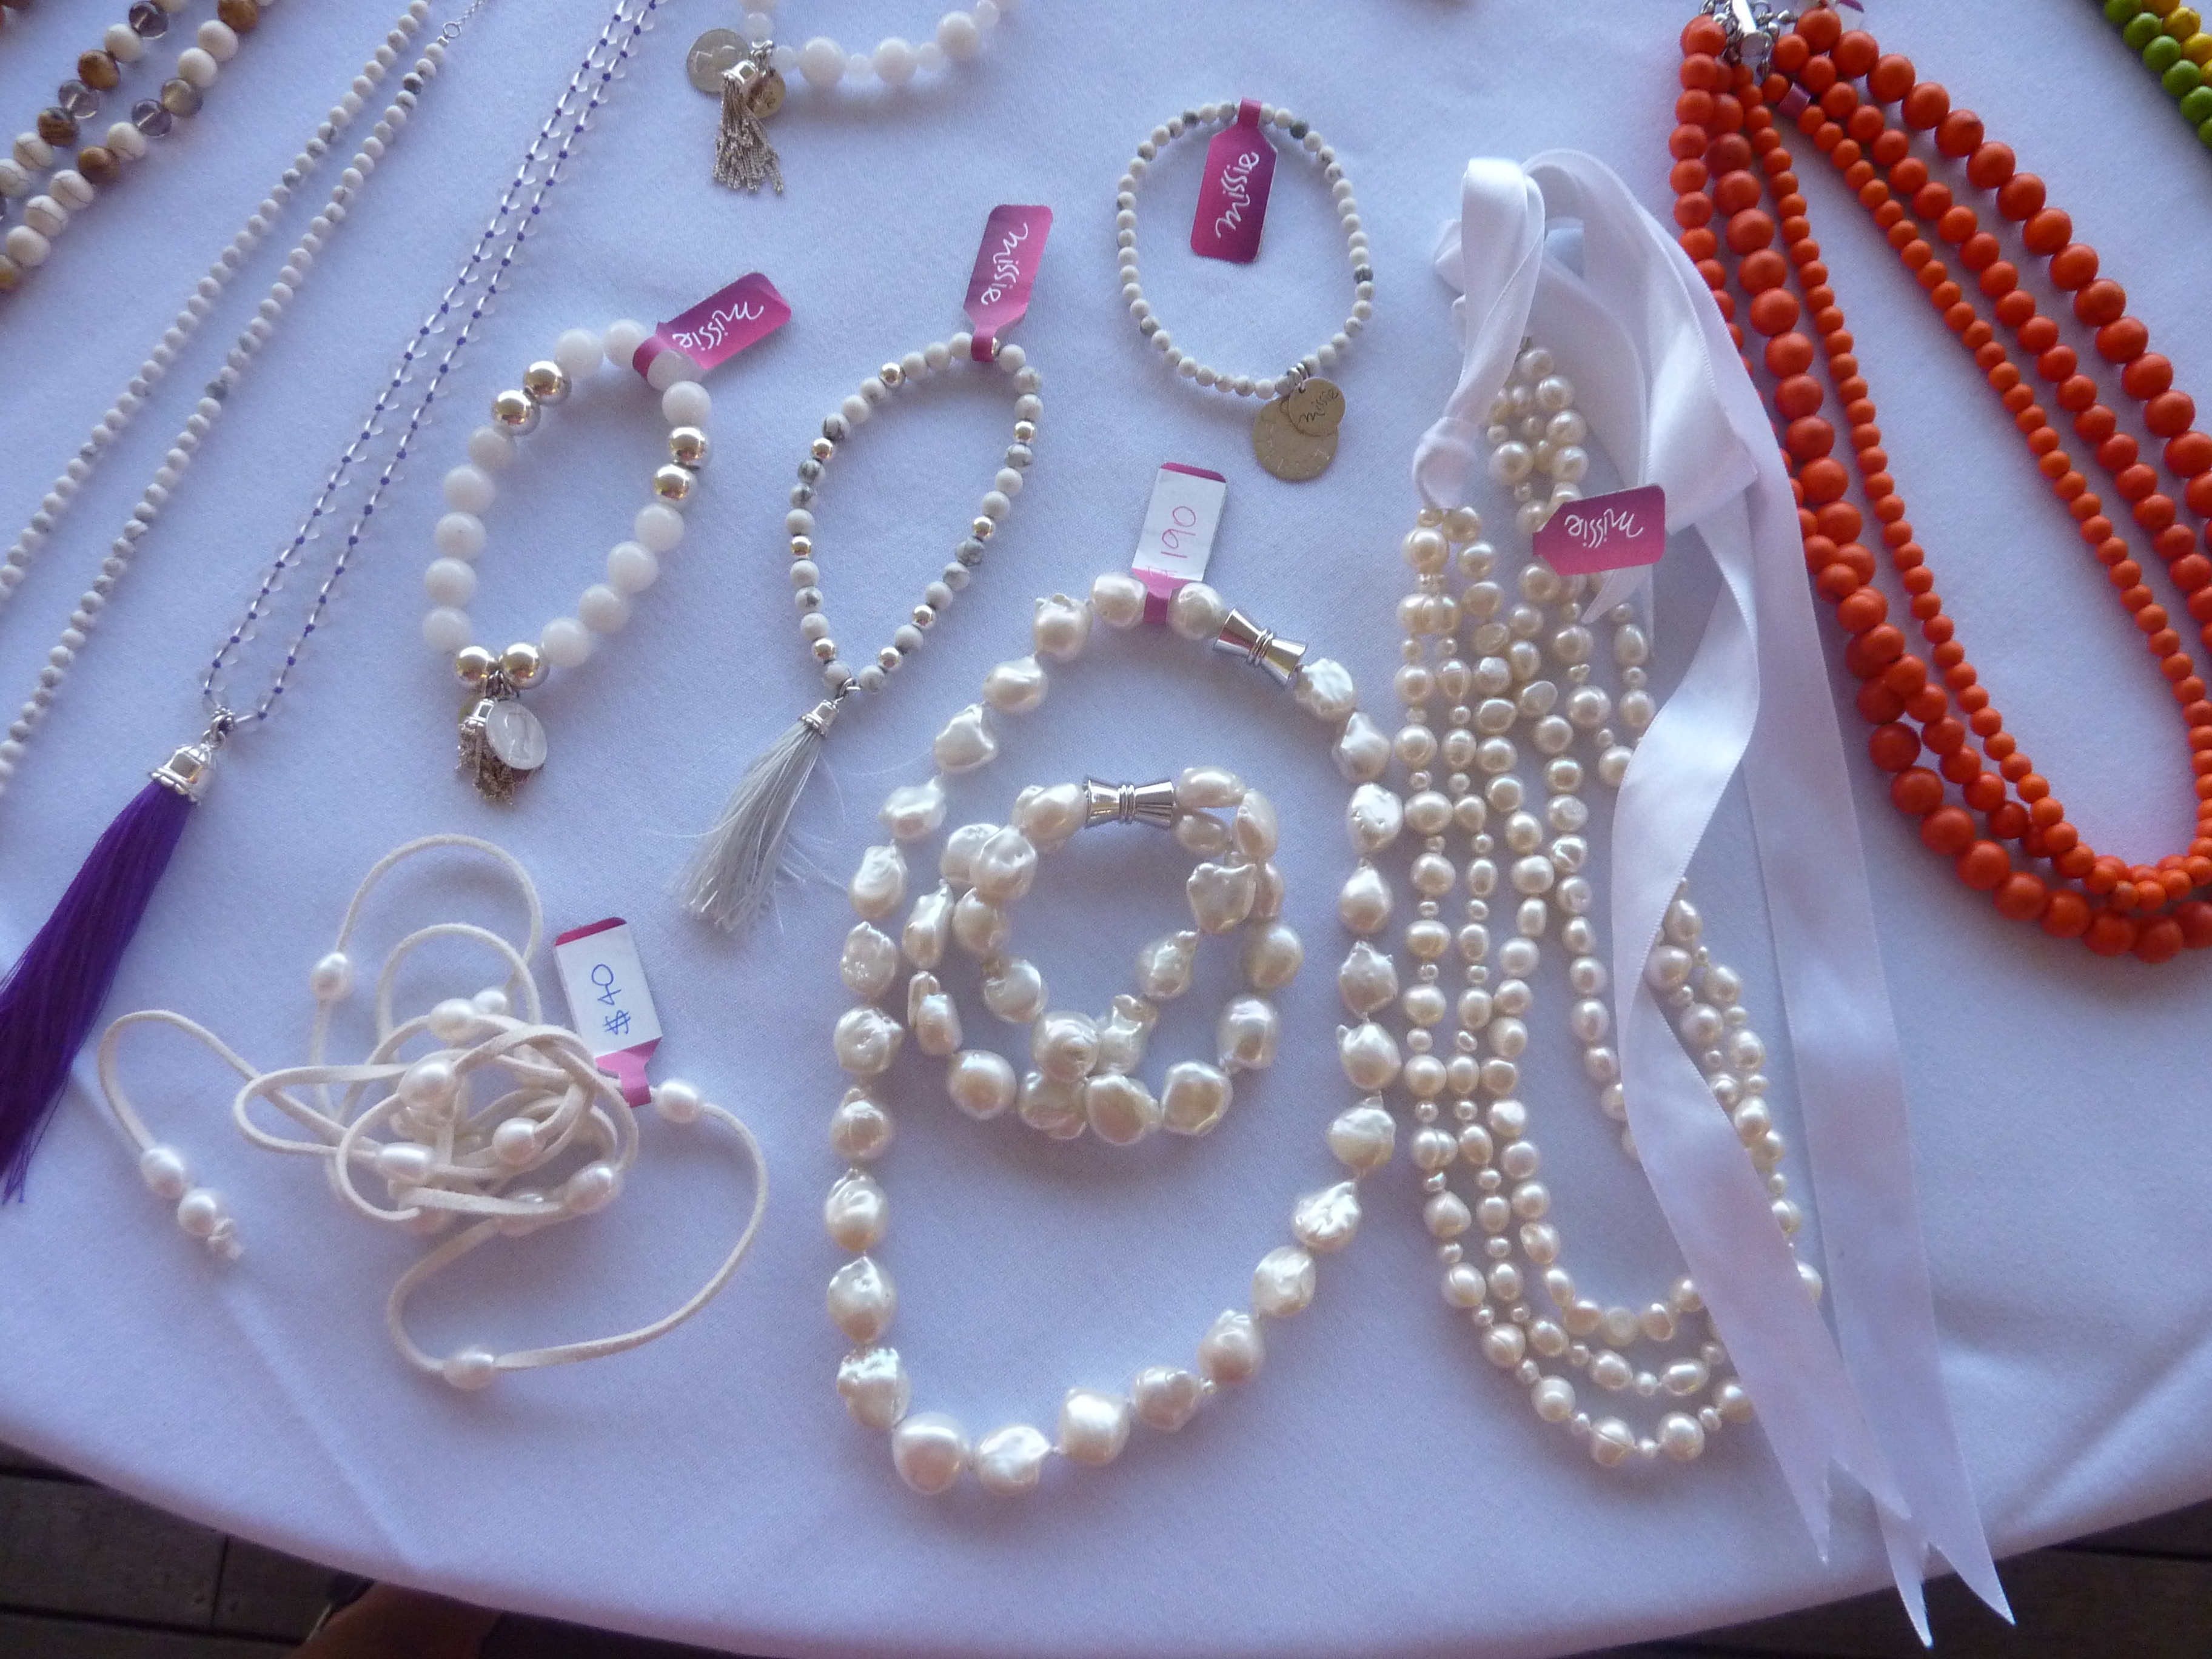 Genuine pearl necklace or bracelet - large $190